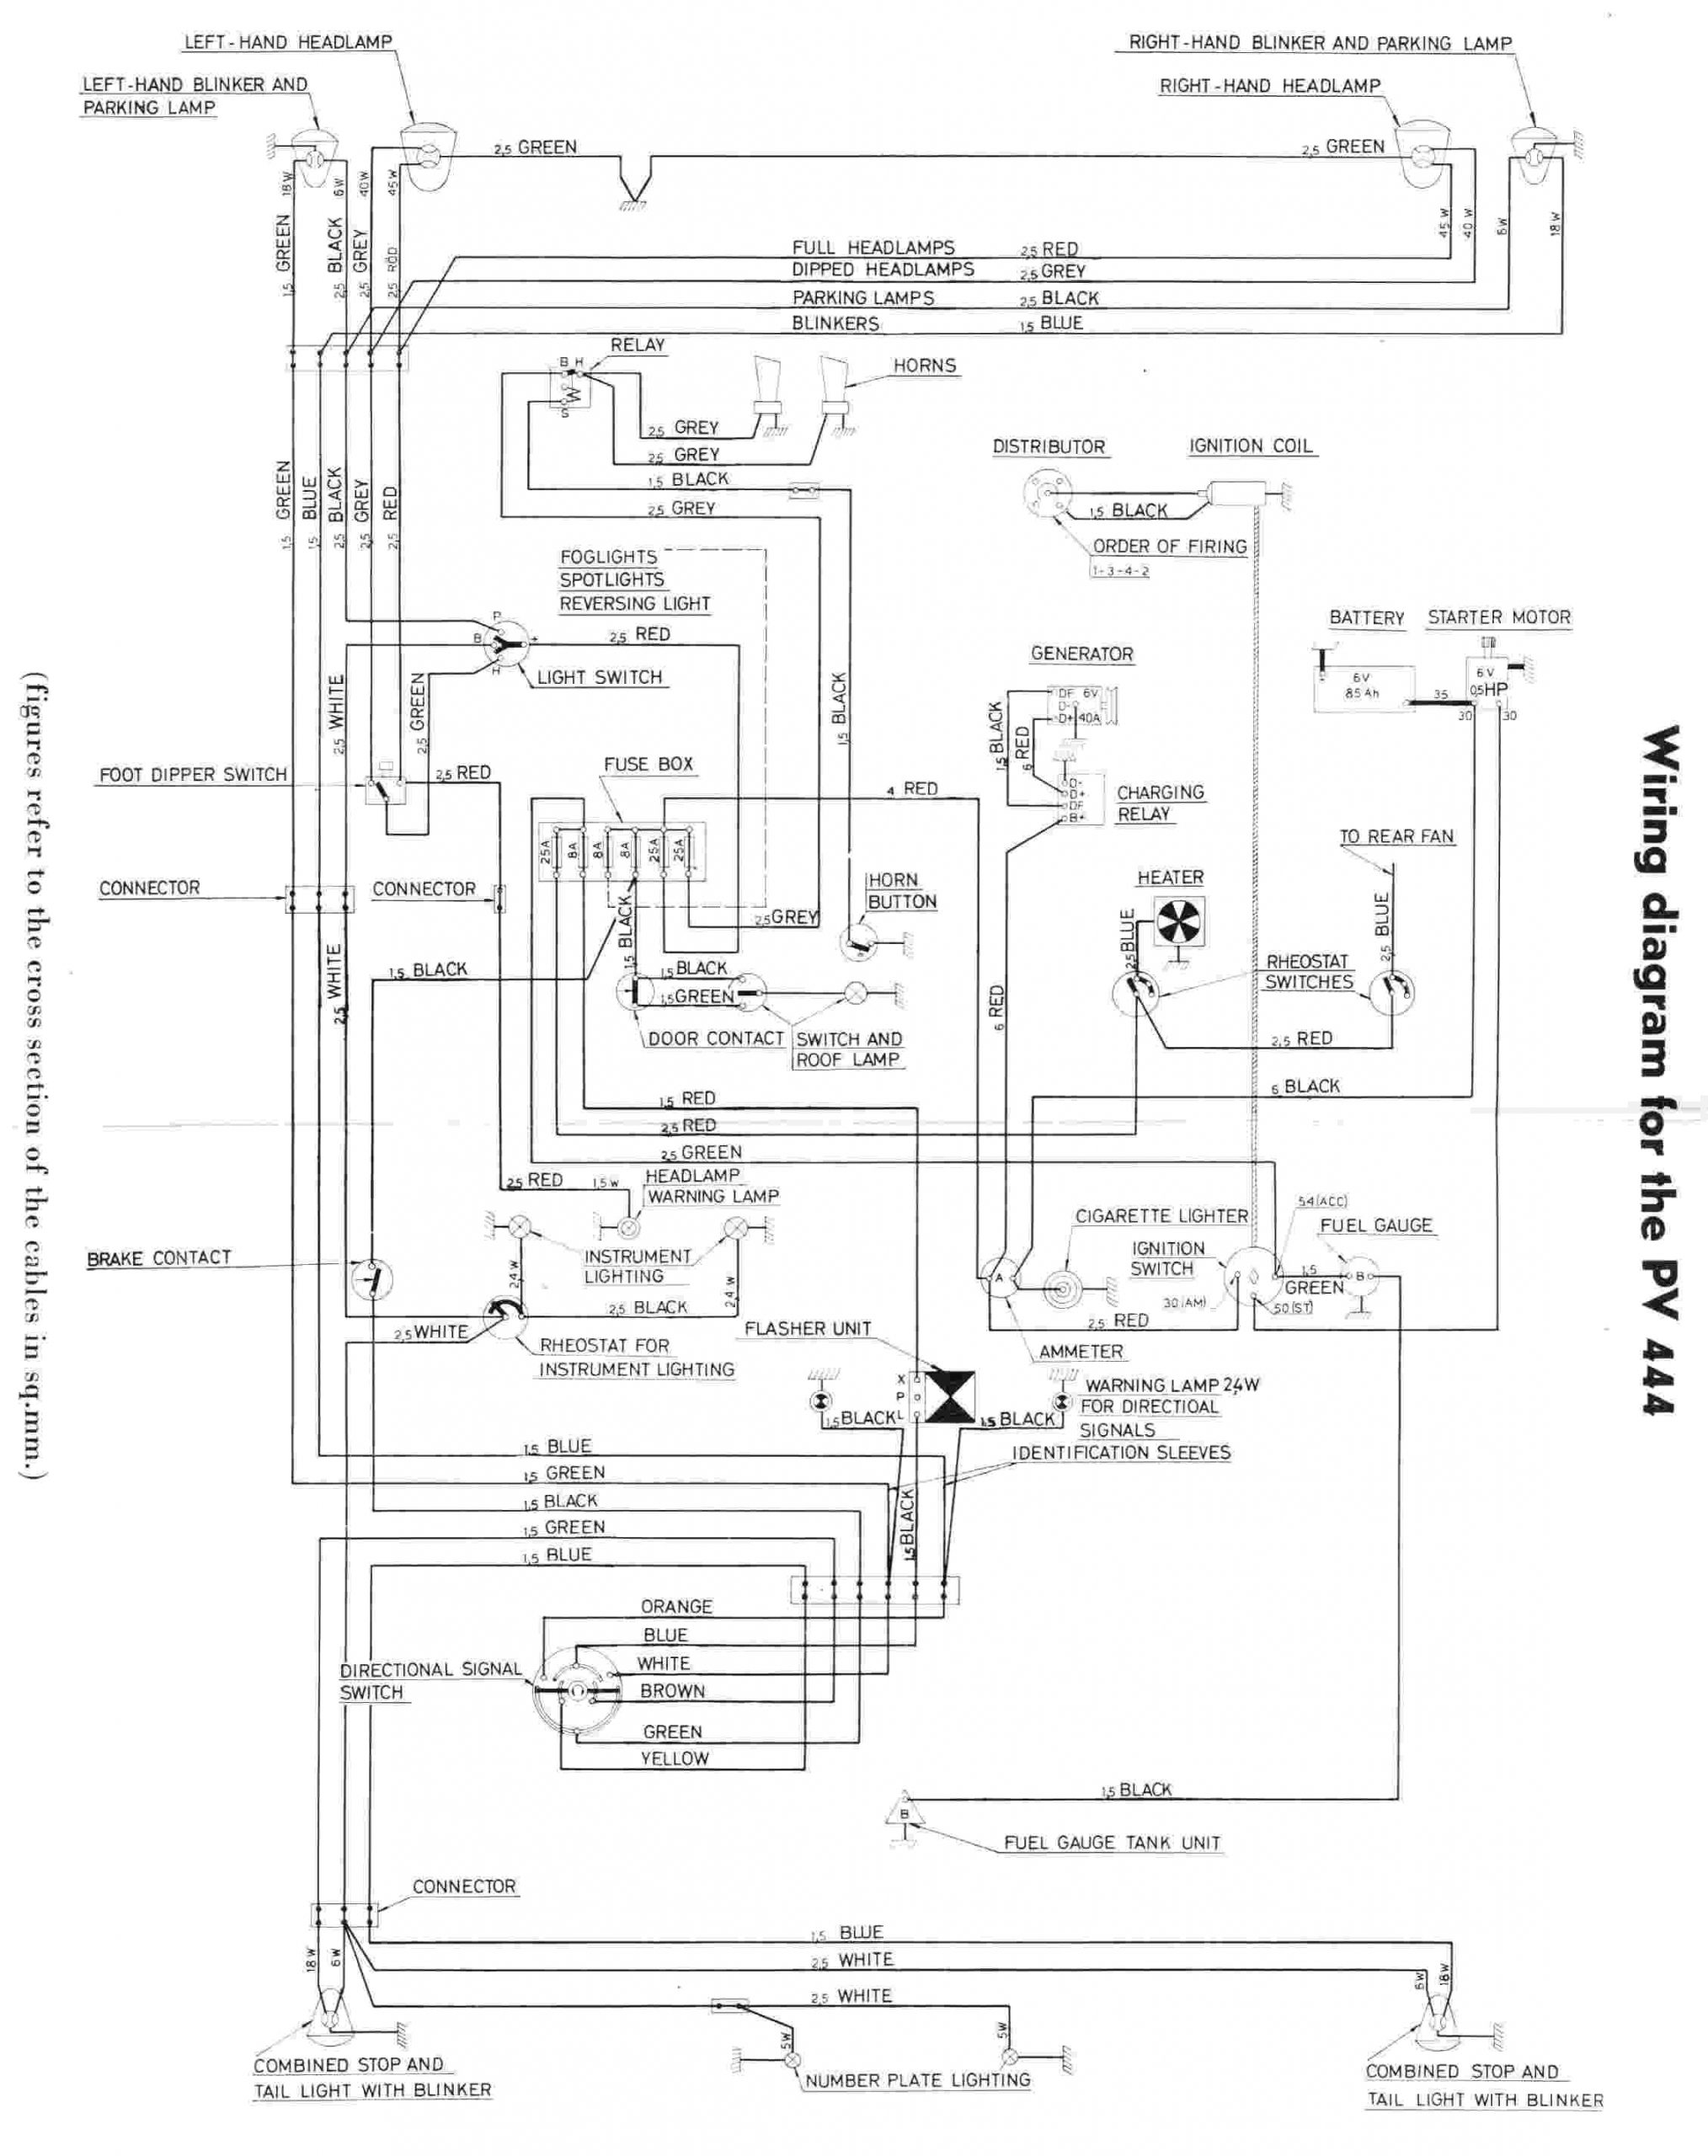 Volvo Hybrid Electrical Wiring Diagram Volvo - Car Pdf Manual, Wiring Diagram & Fault Codes Dtc